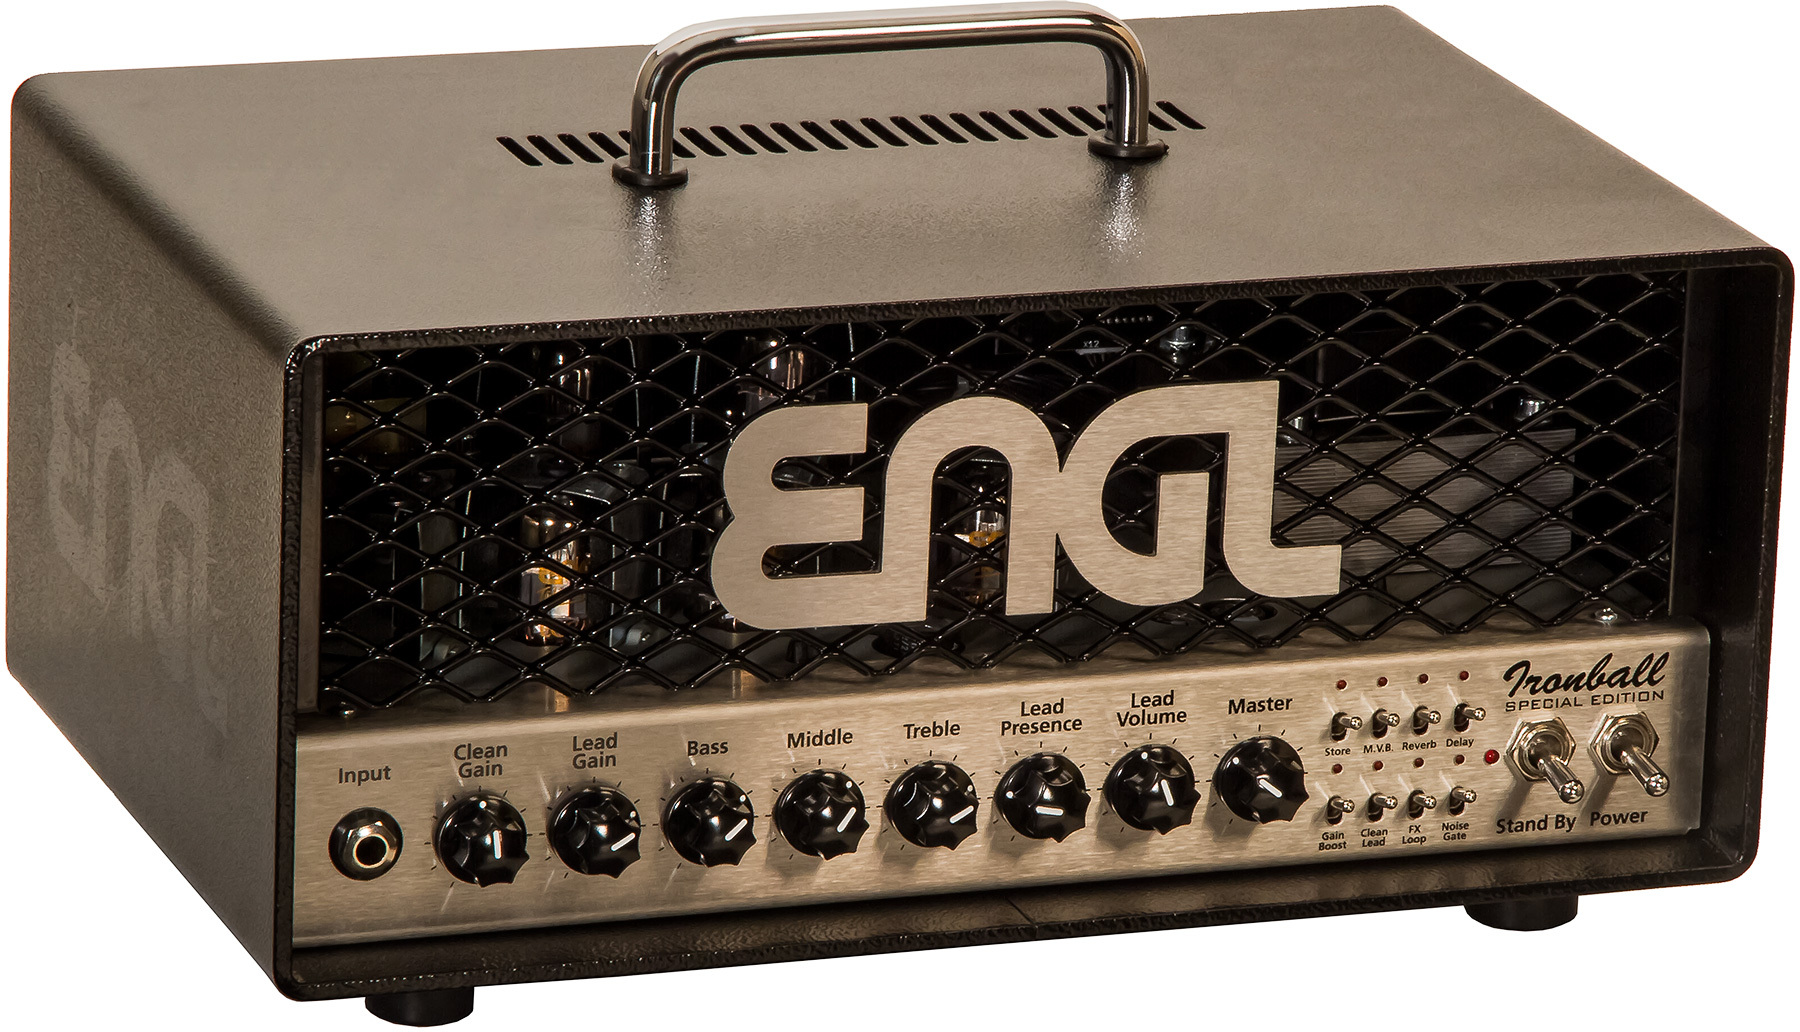 Engl Ironball E606se Special Edition Head 20w El84 - Electric guitar amp head - Main picture